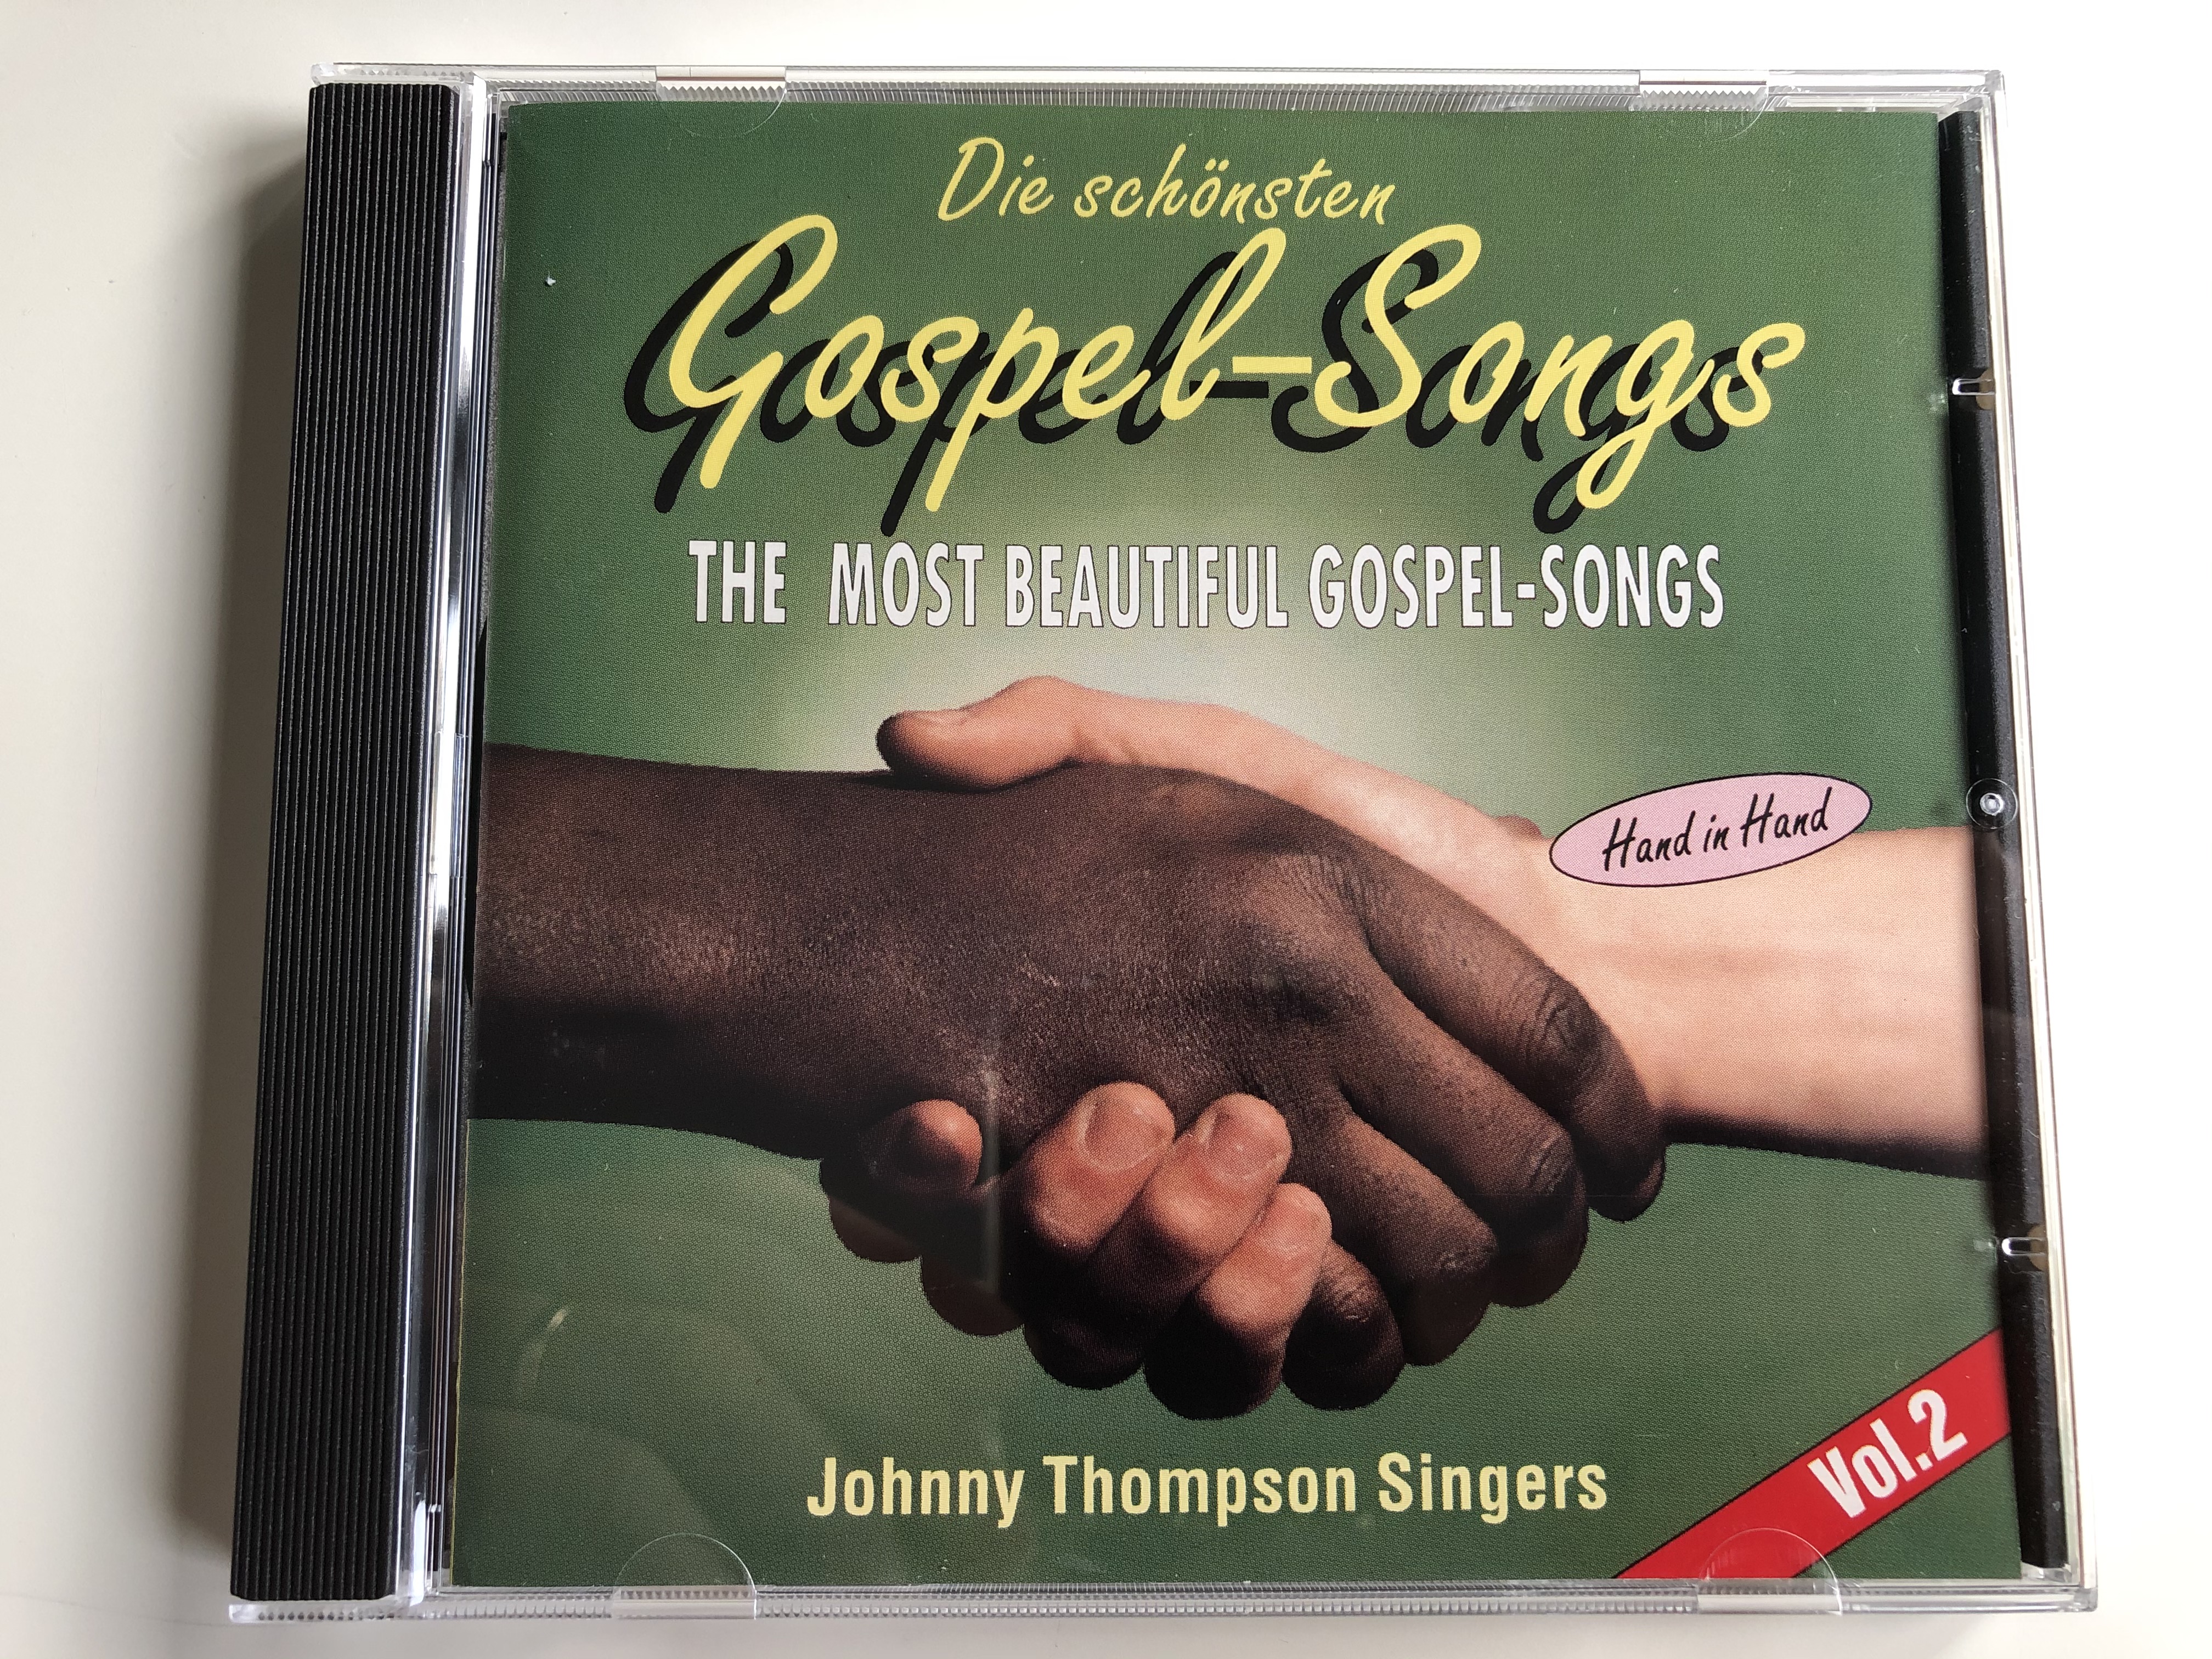 die-schonsten-gospel-songs-the-most-beautiful-gospel-songs-hand-in-hand-johnny-thompson-singers-high-grade-3x-audio-cd-105-8-.jpg